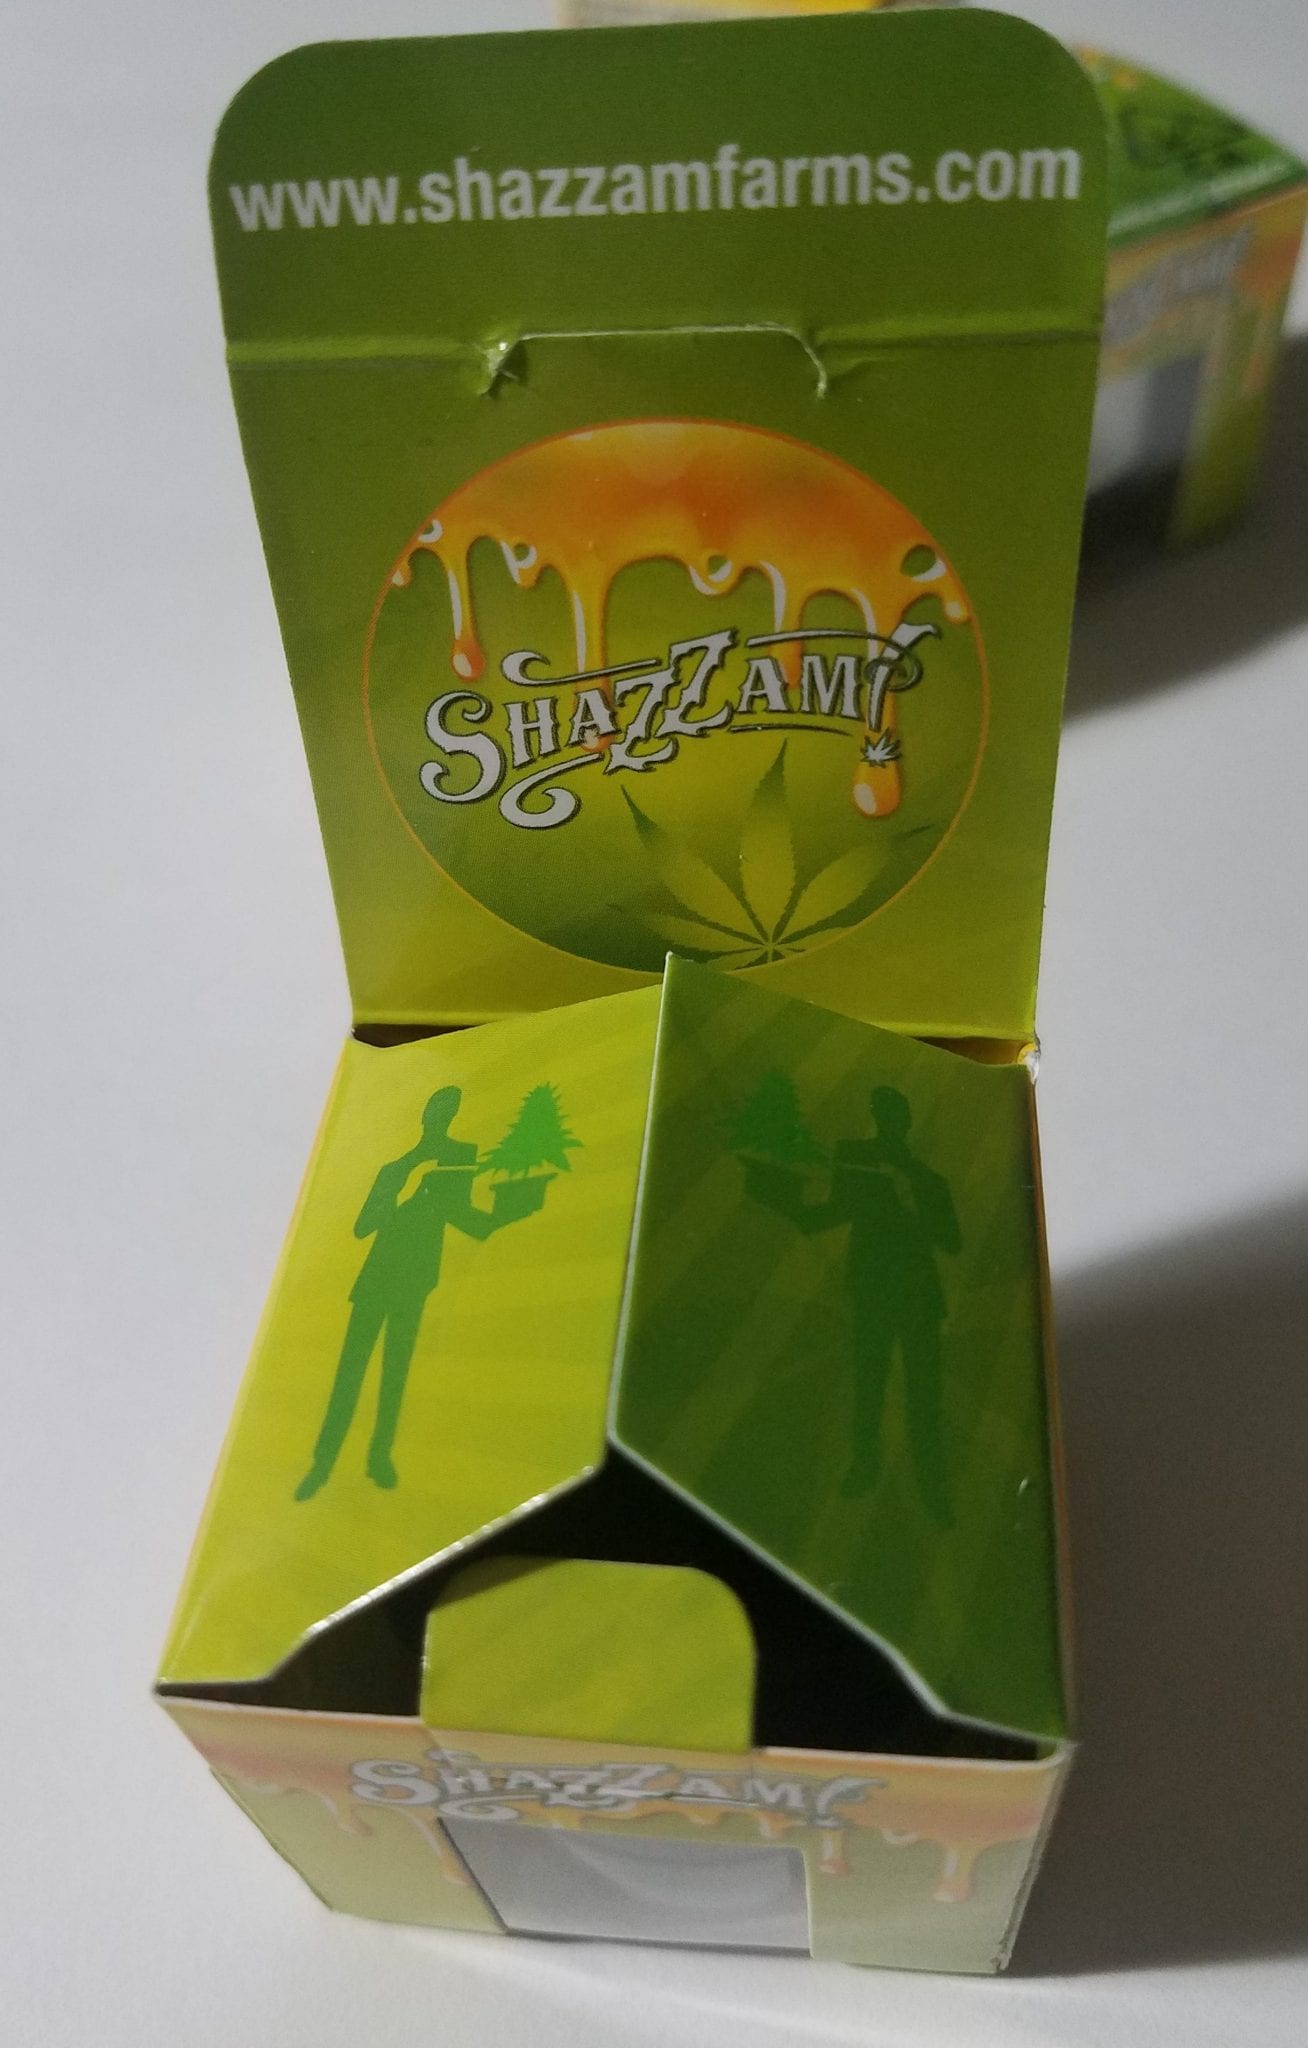 Shazzam Farms packaging open